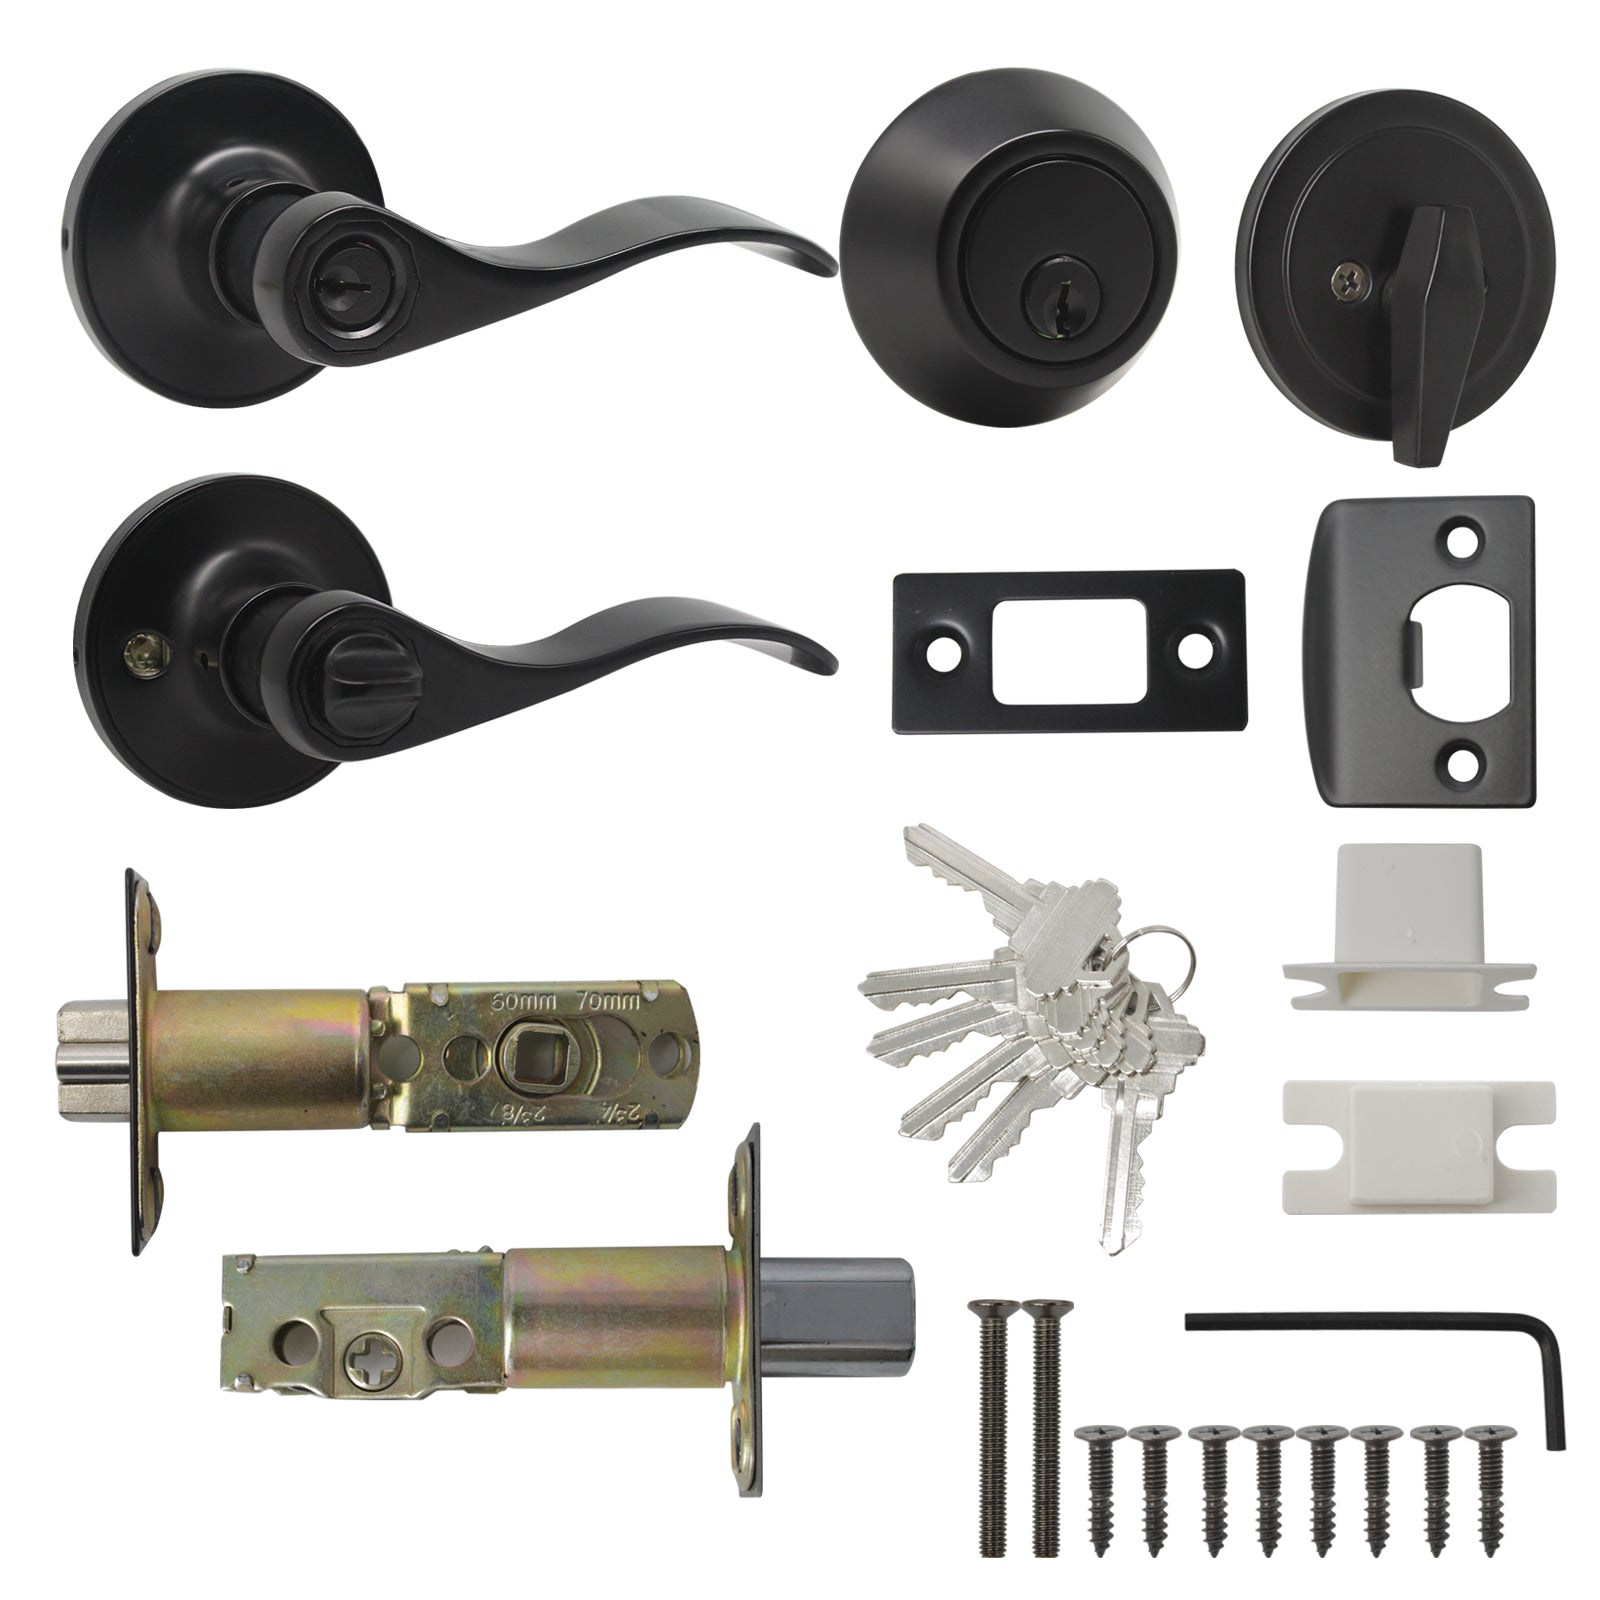 Wave Style Door Lever Lock with Single Cylinder Deadbolt Combo Packs Black Finish - Keyed Alike DL12061ET-101BK - Probrico